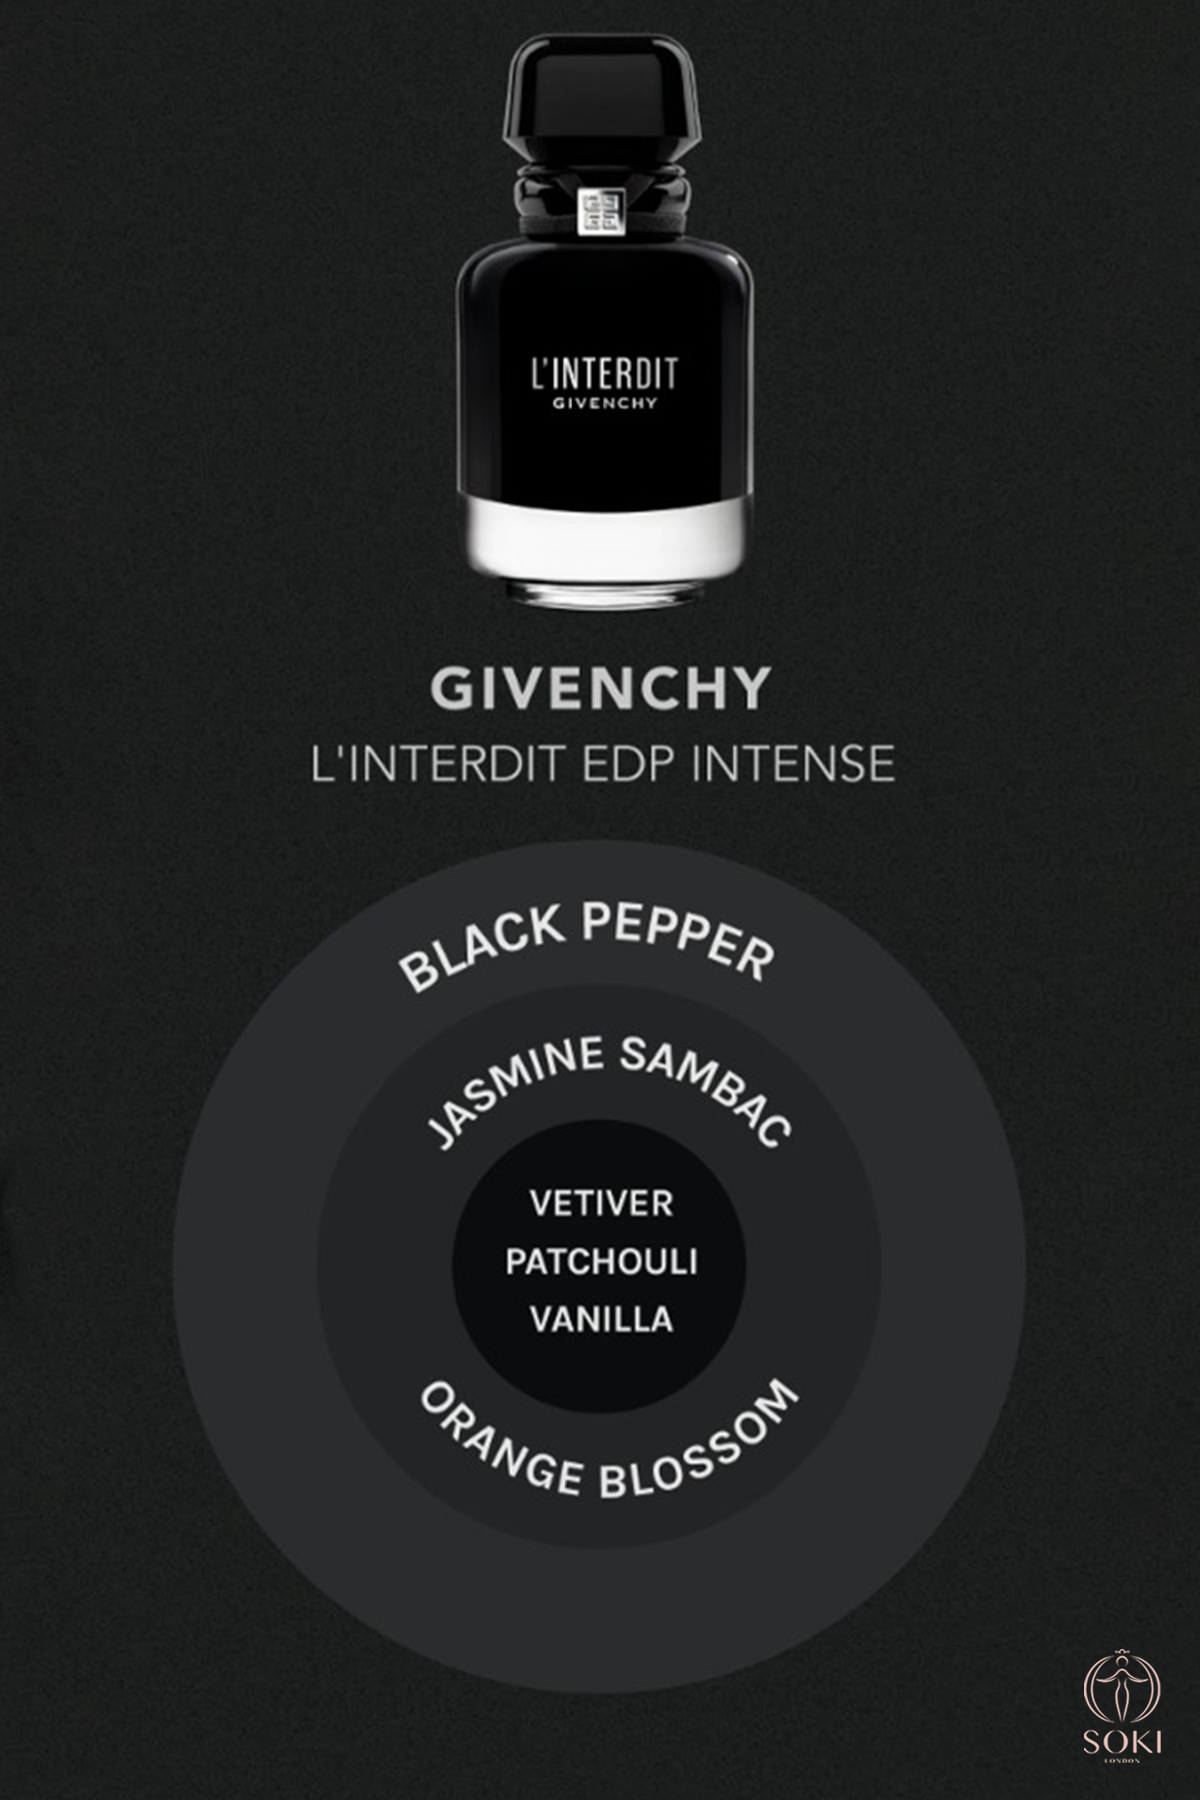 Givenchy L'interdit intenso